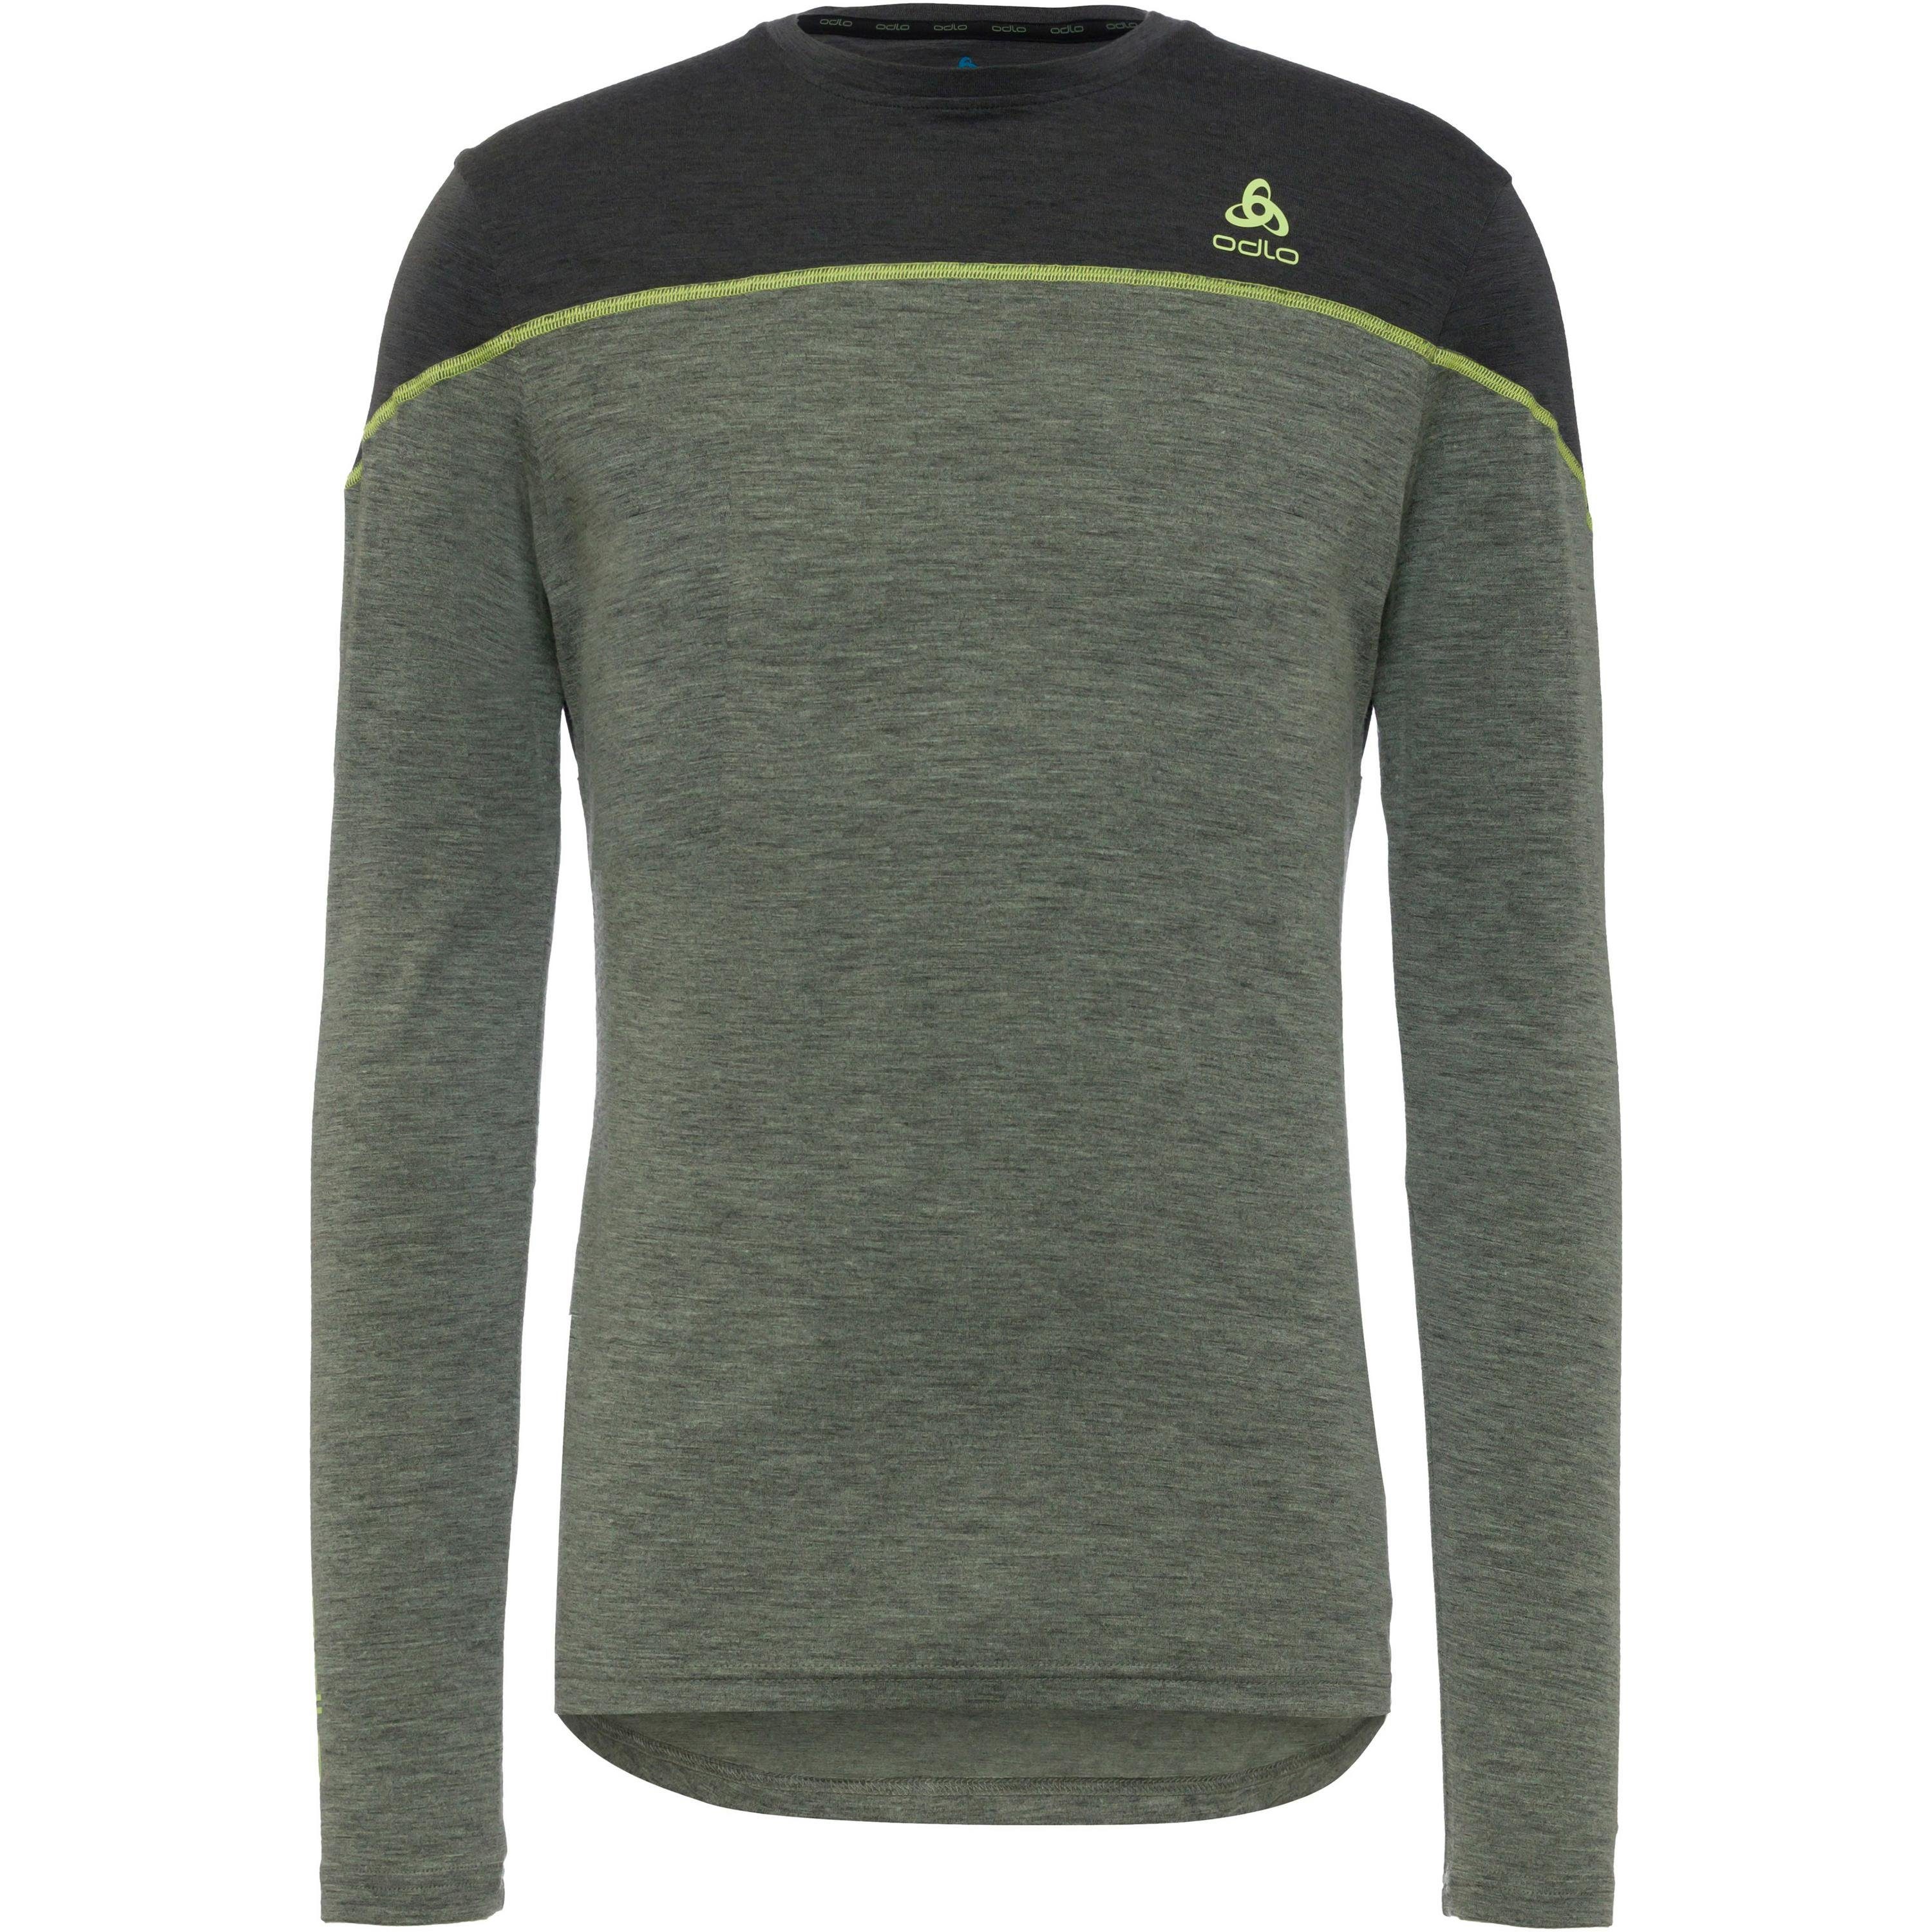 Wool Performance green-dark Odlo Funktionsshirt Revelstoke grey matte 150 melange